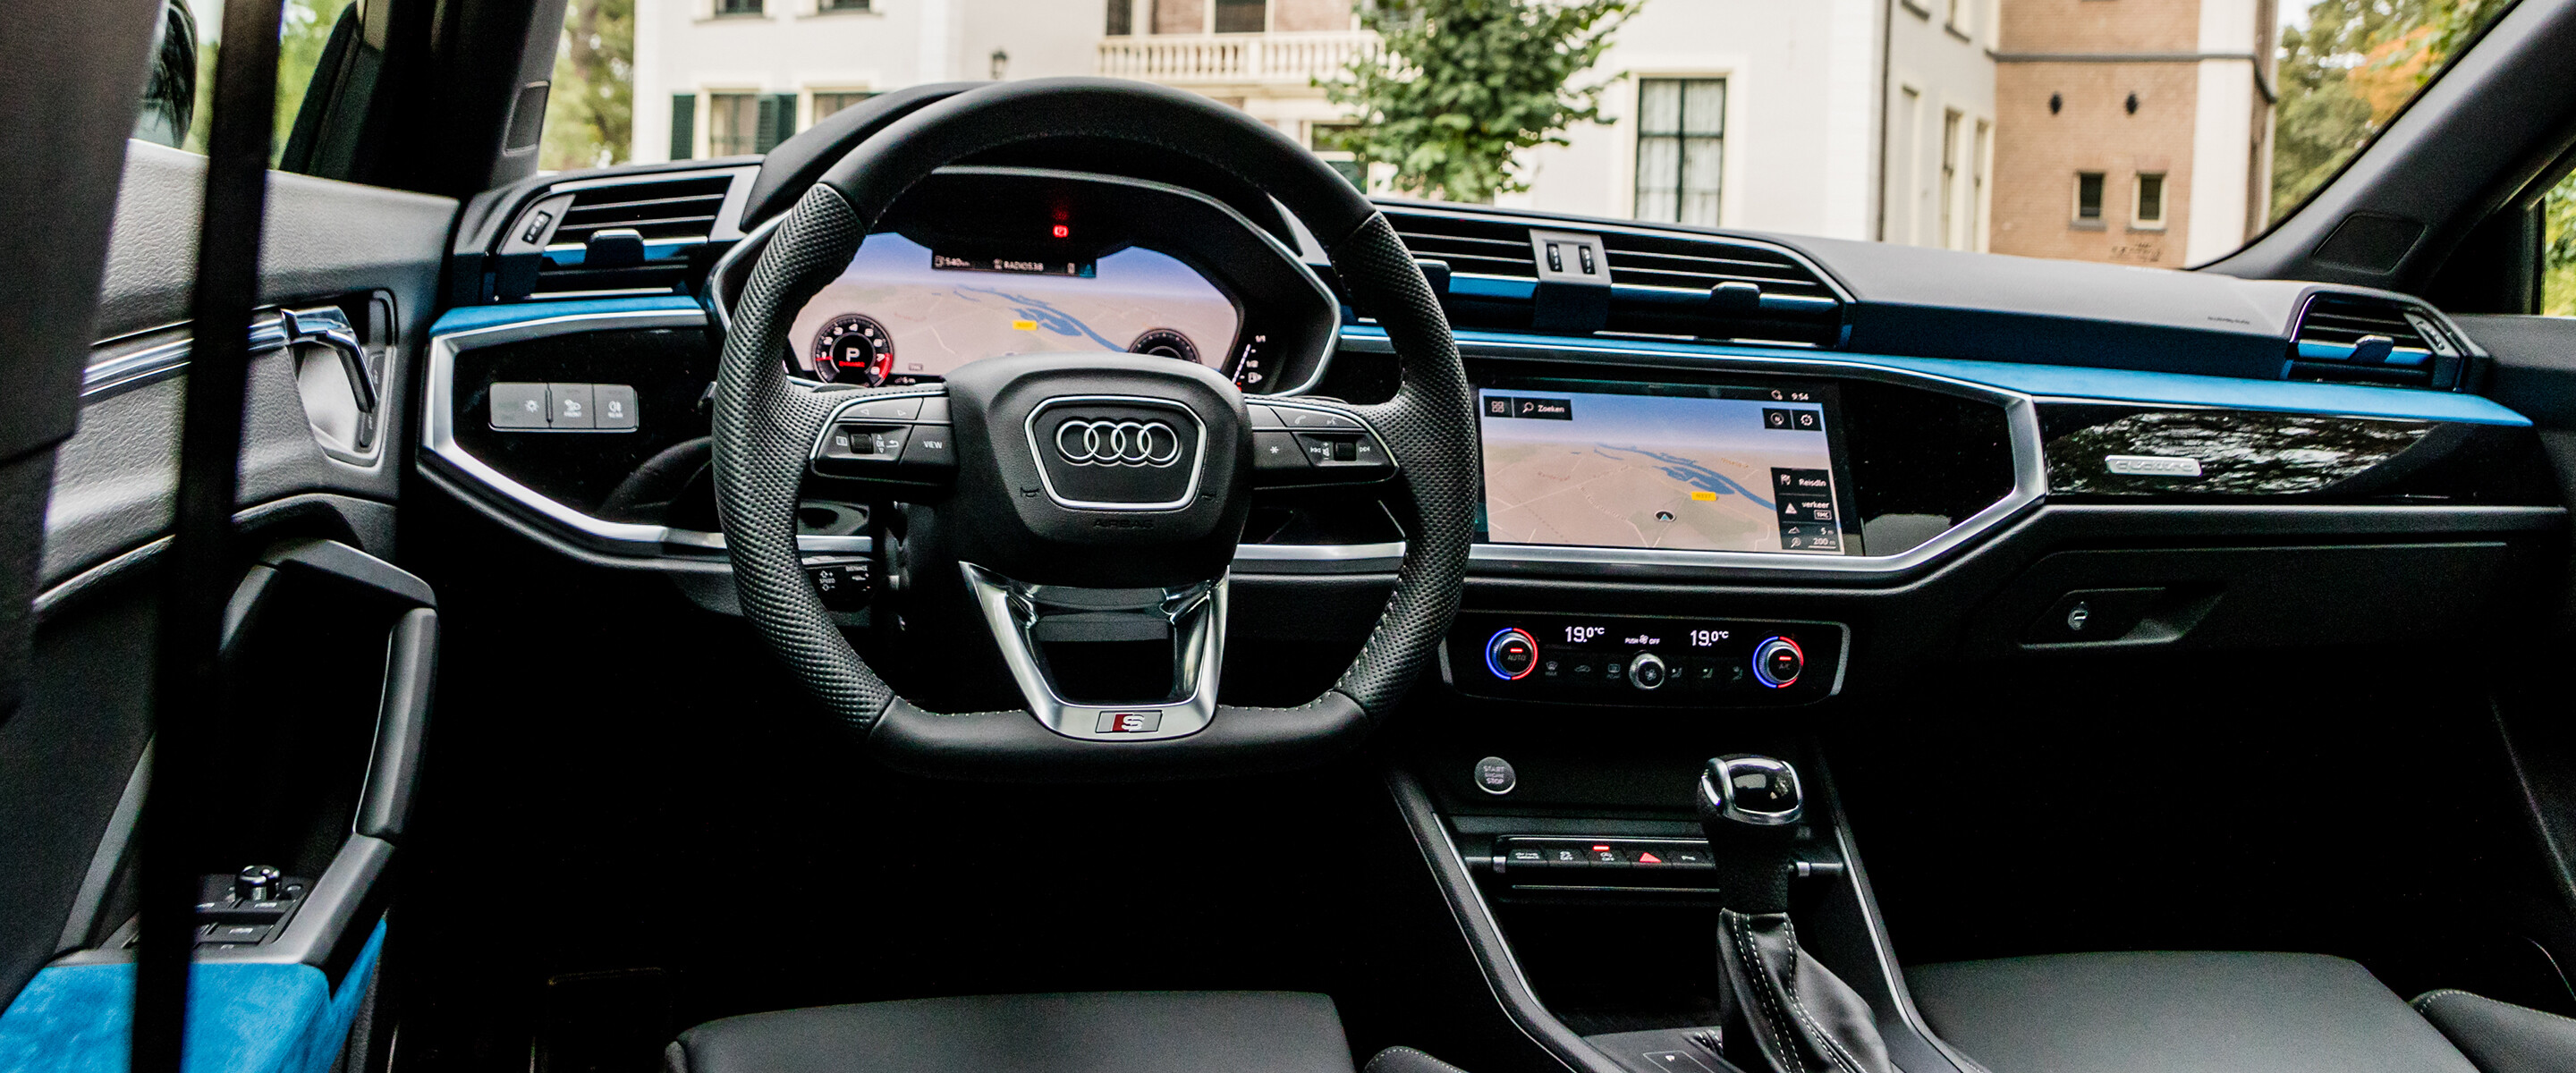 Audi Q3 SB interieur - Brede visual